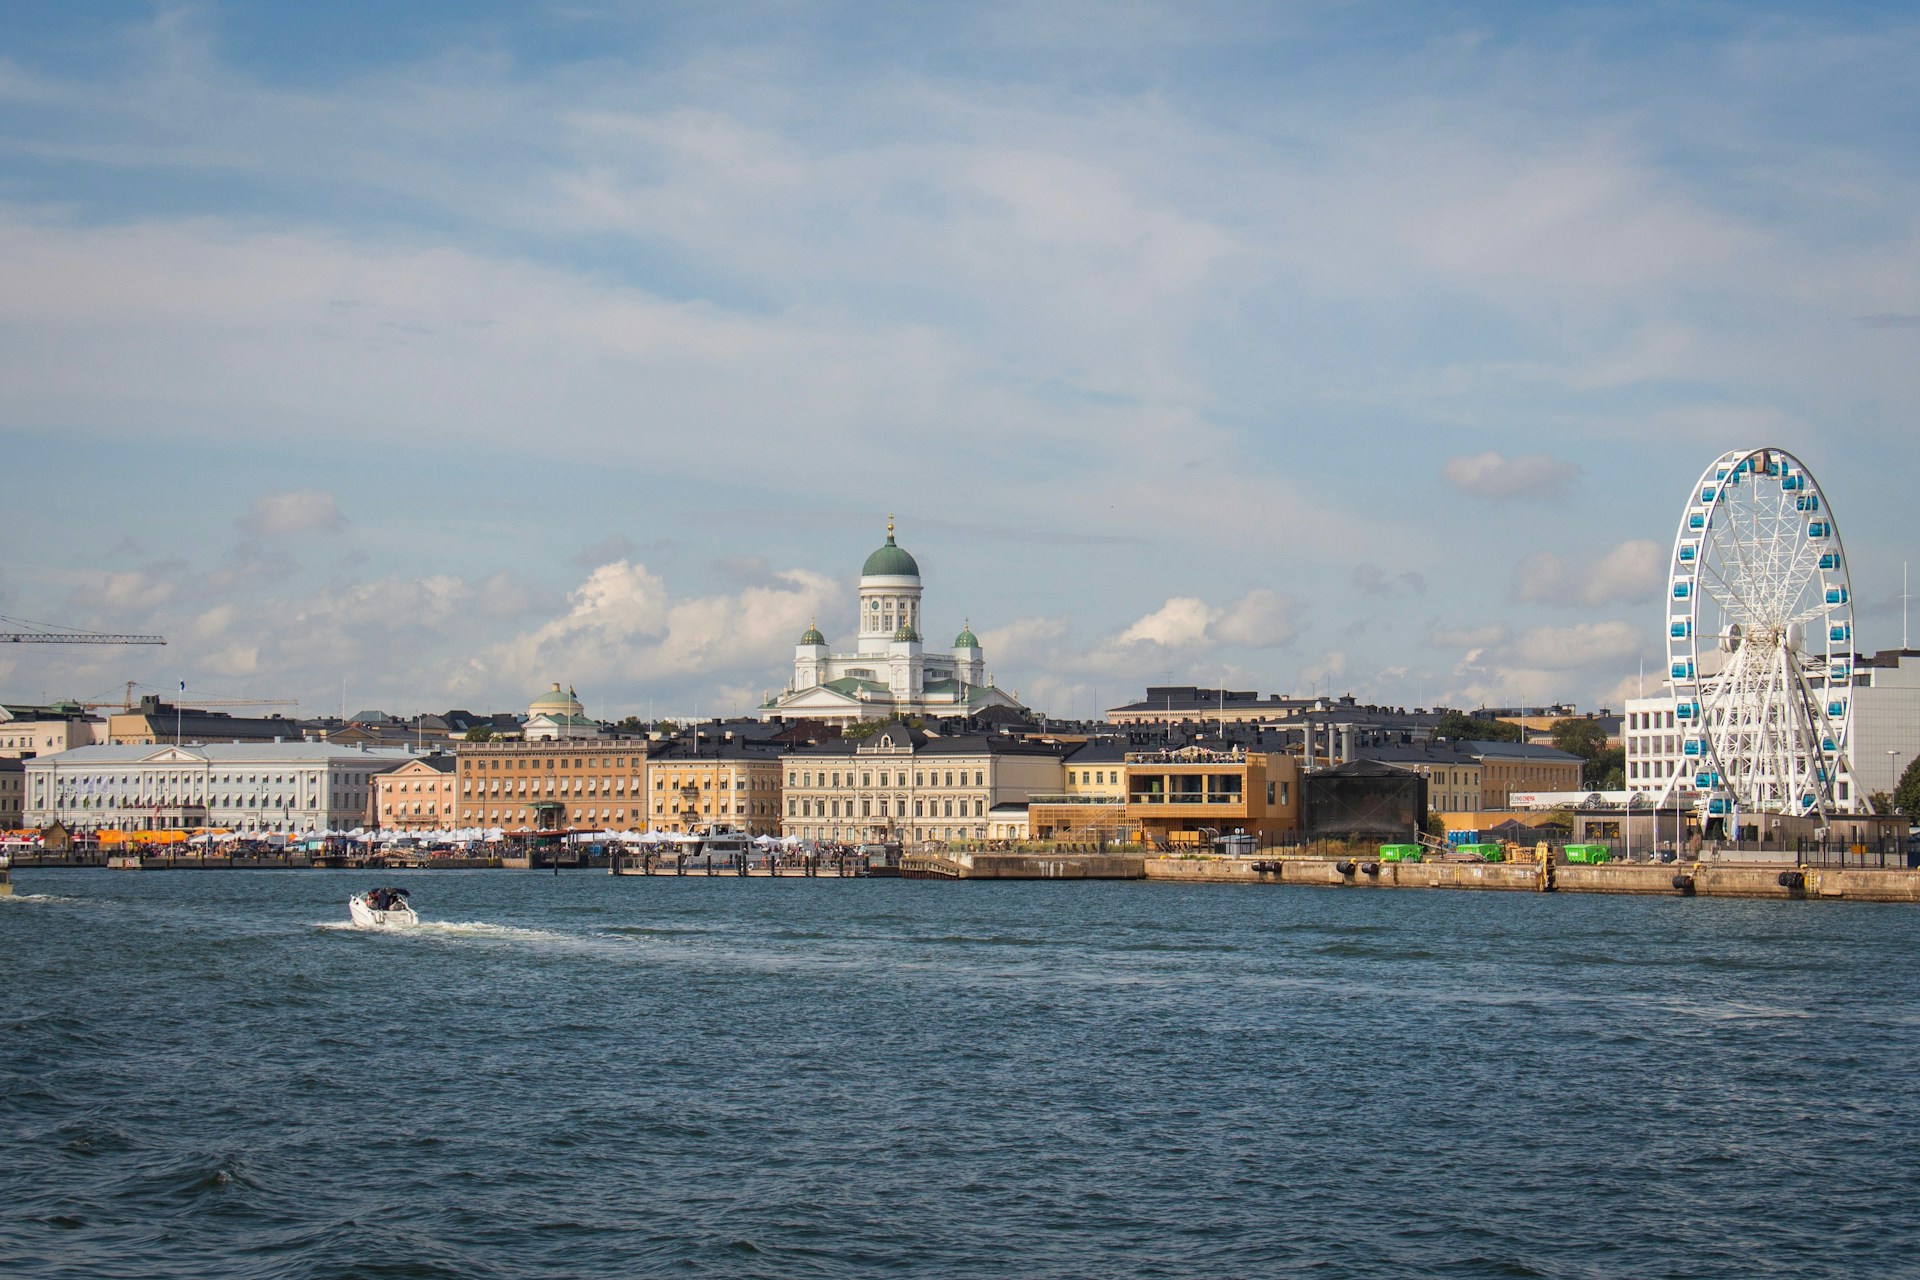 Helsinki, Finland as seen from the water